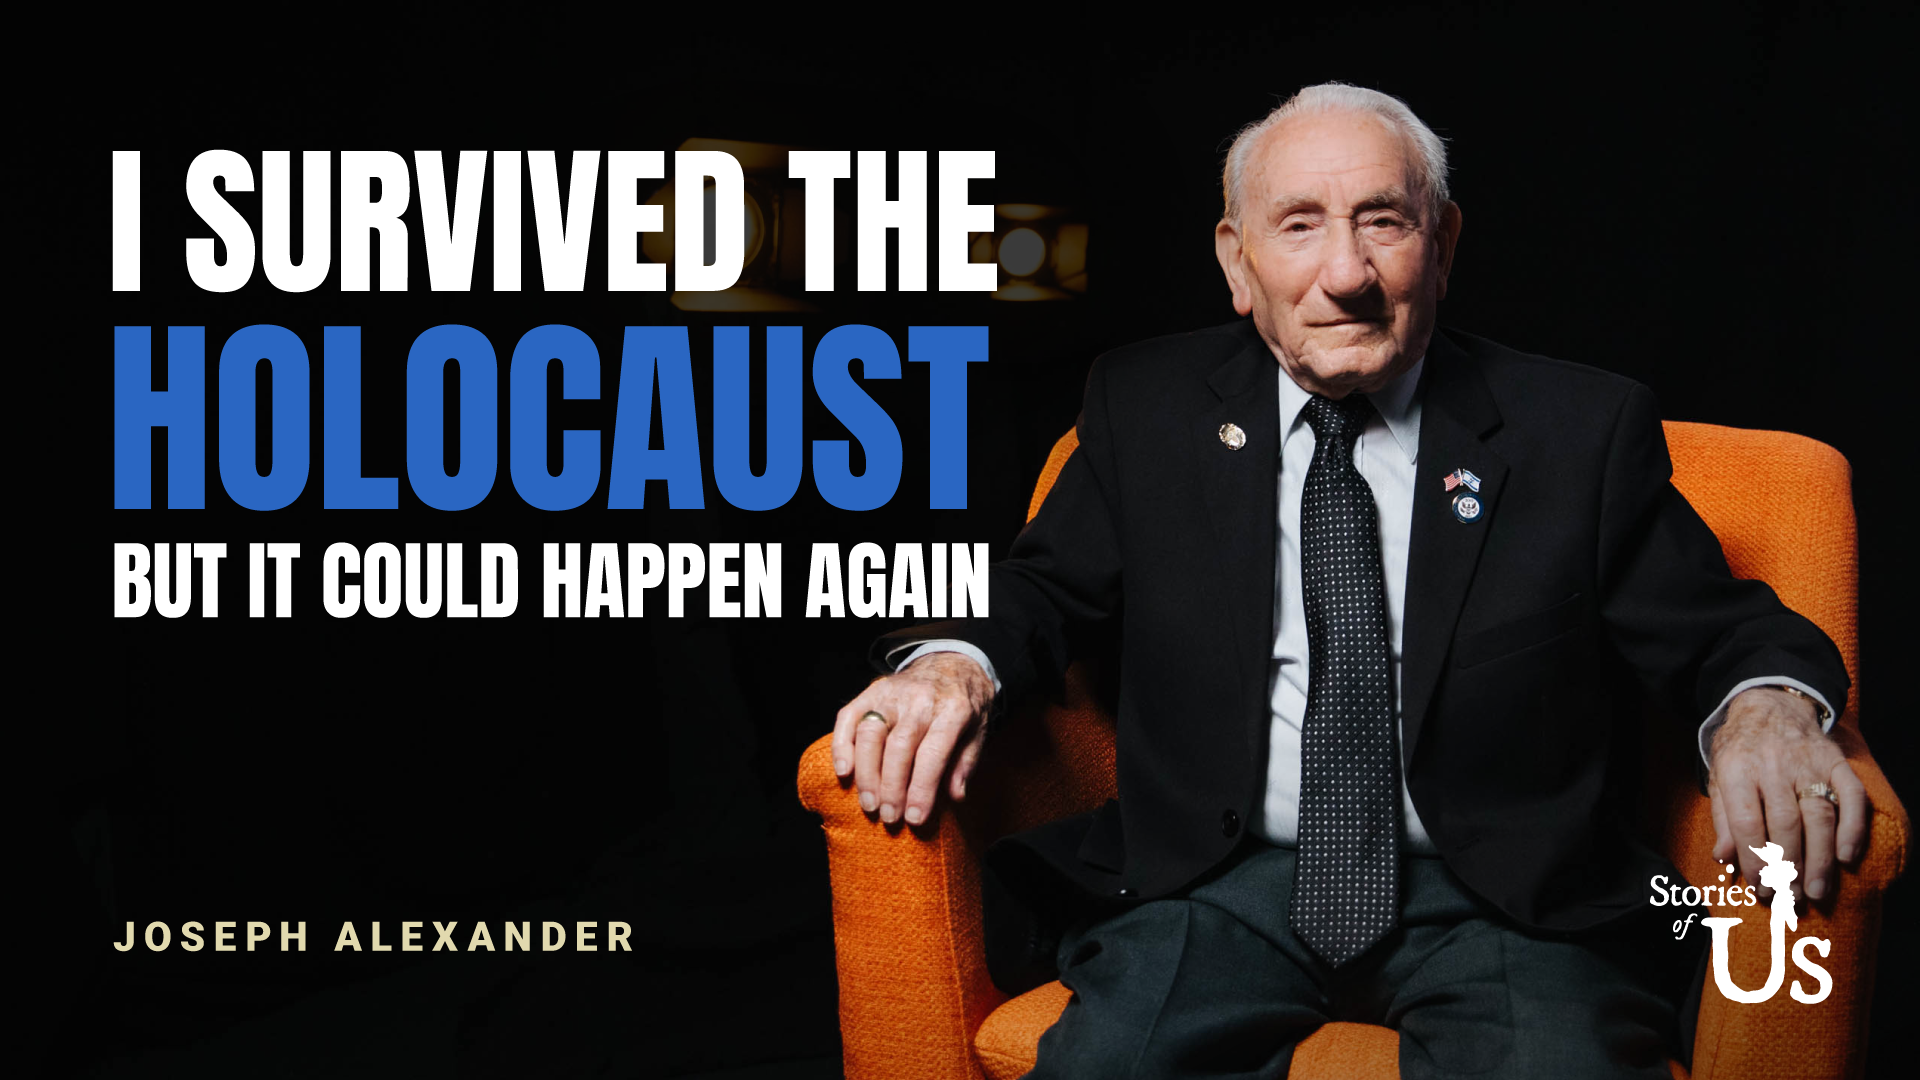 Joseph Alexander: I Survived the Holocaust but It Could Happen Again